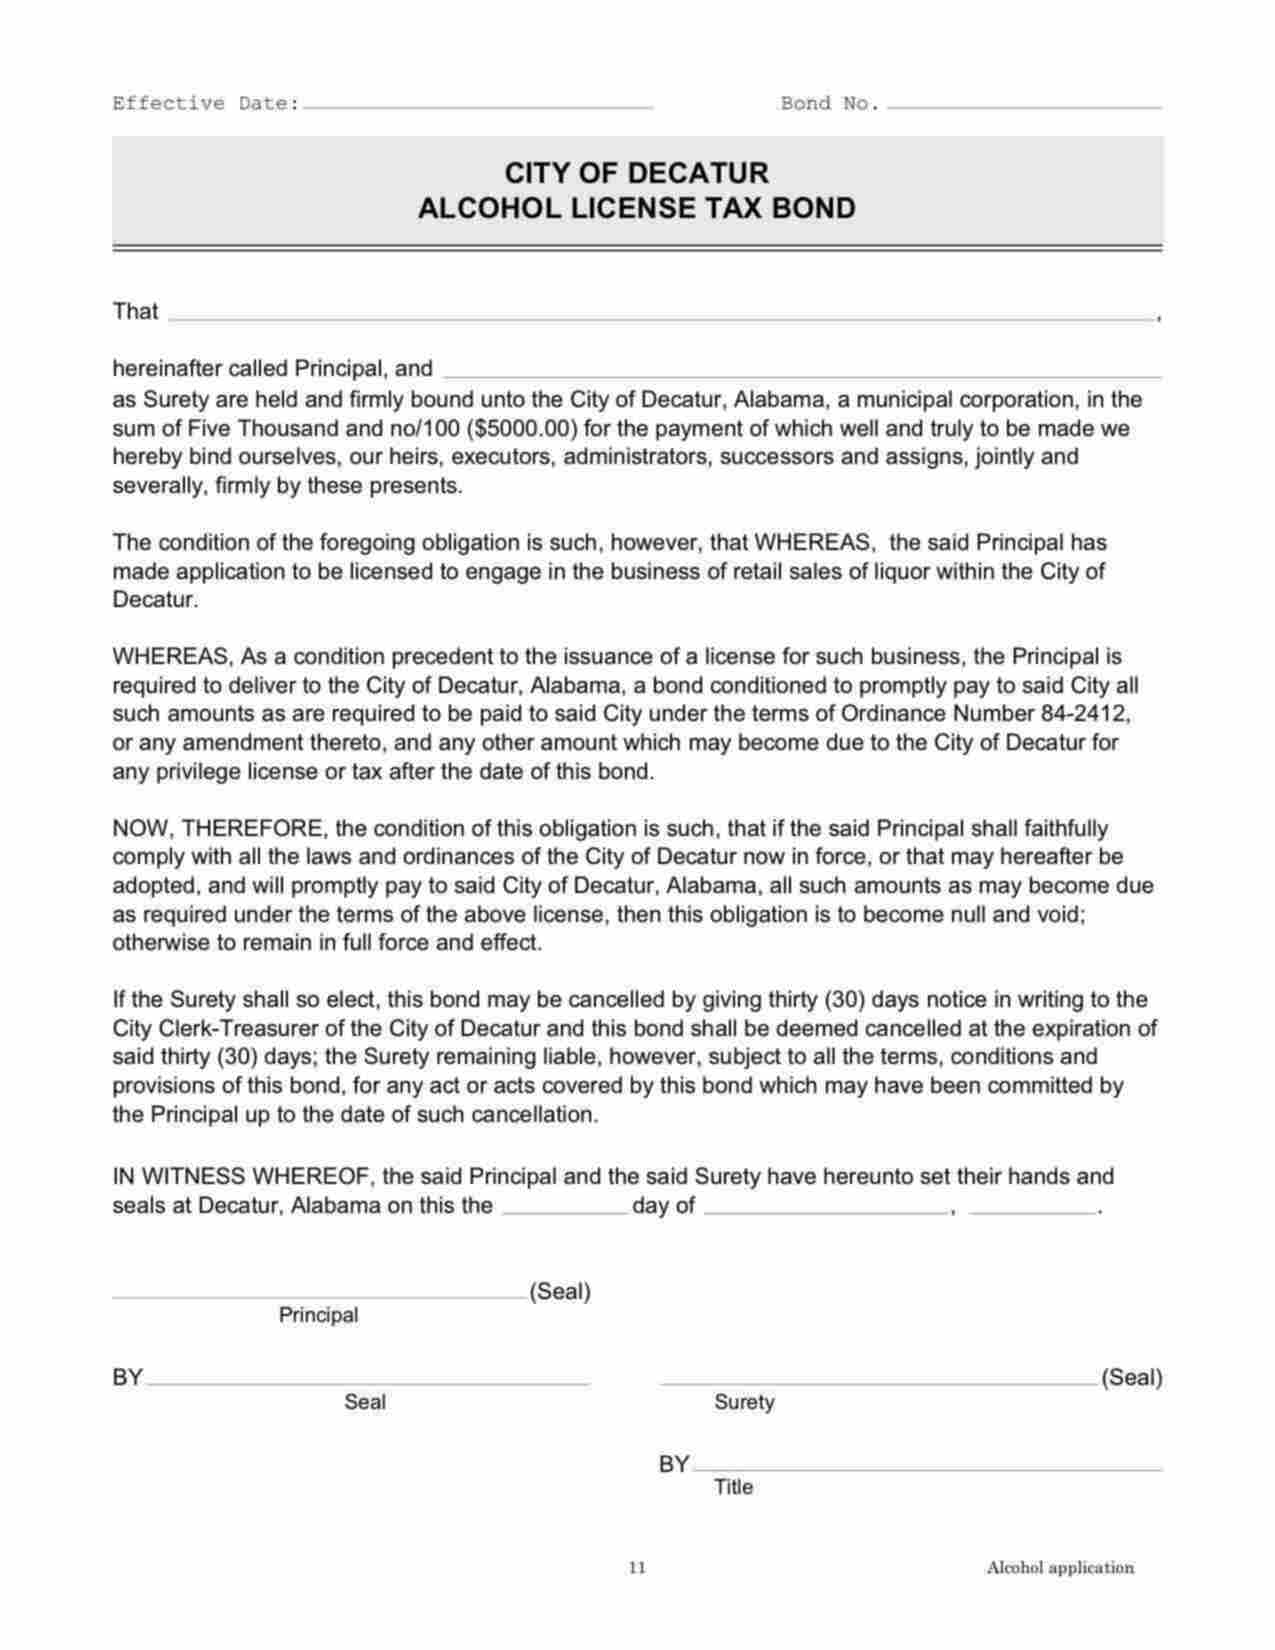 Alabama Alcohol License Tax Bond Form